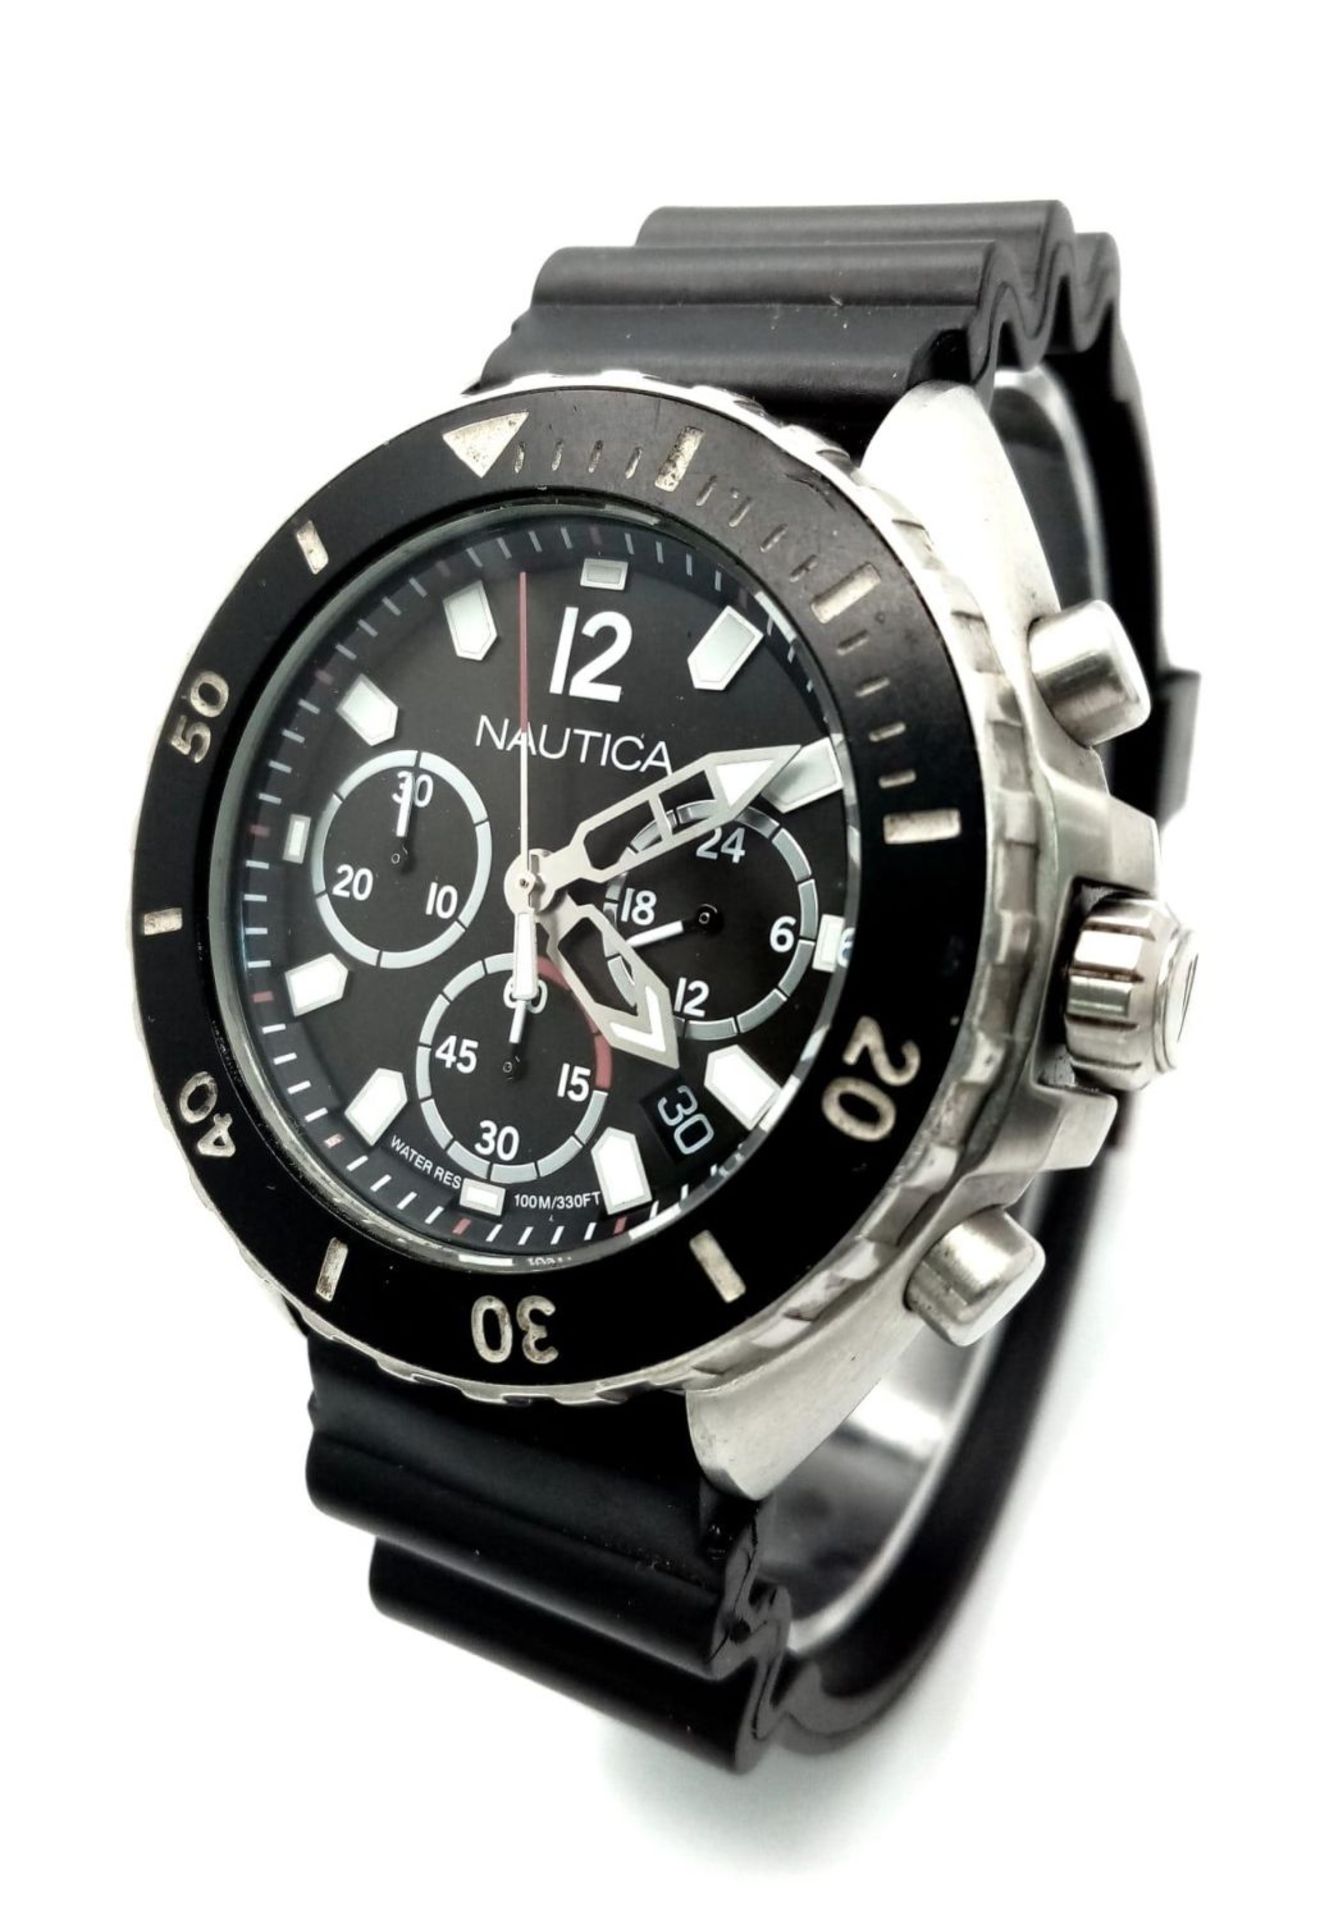 A Nautica Chronograph Quartz Gents Watch. Black rubber strap . Stainless steel case - 46mm. Black